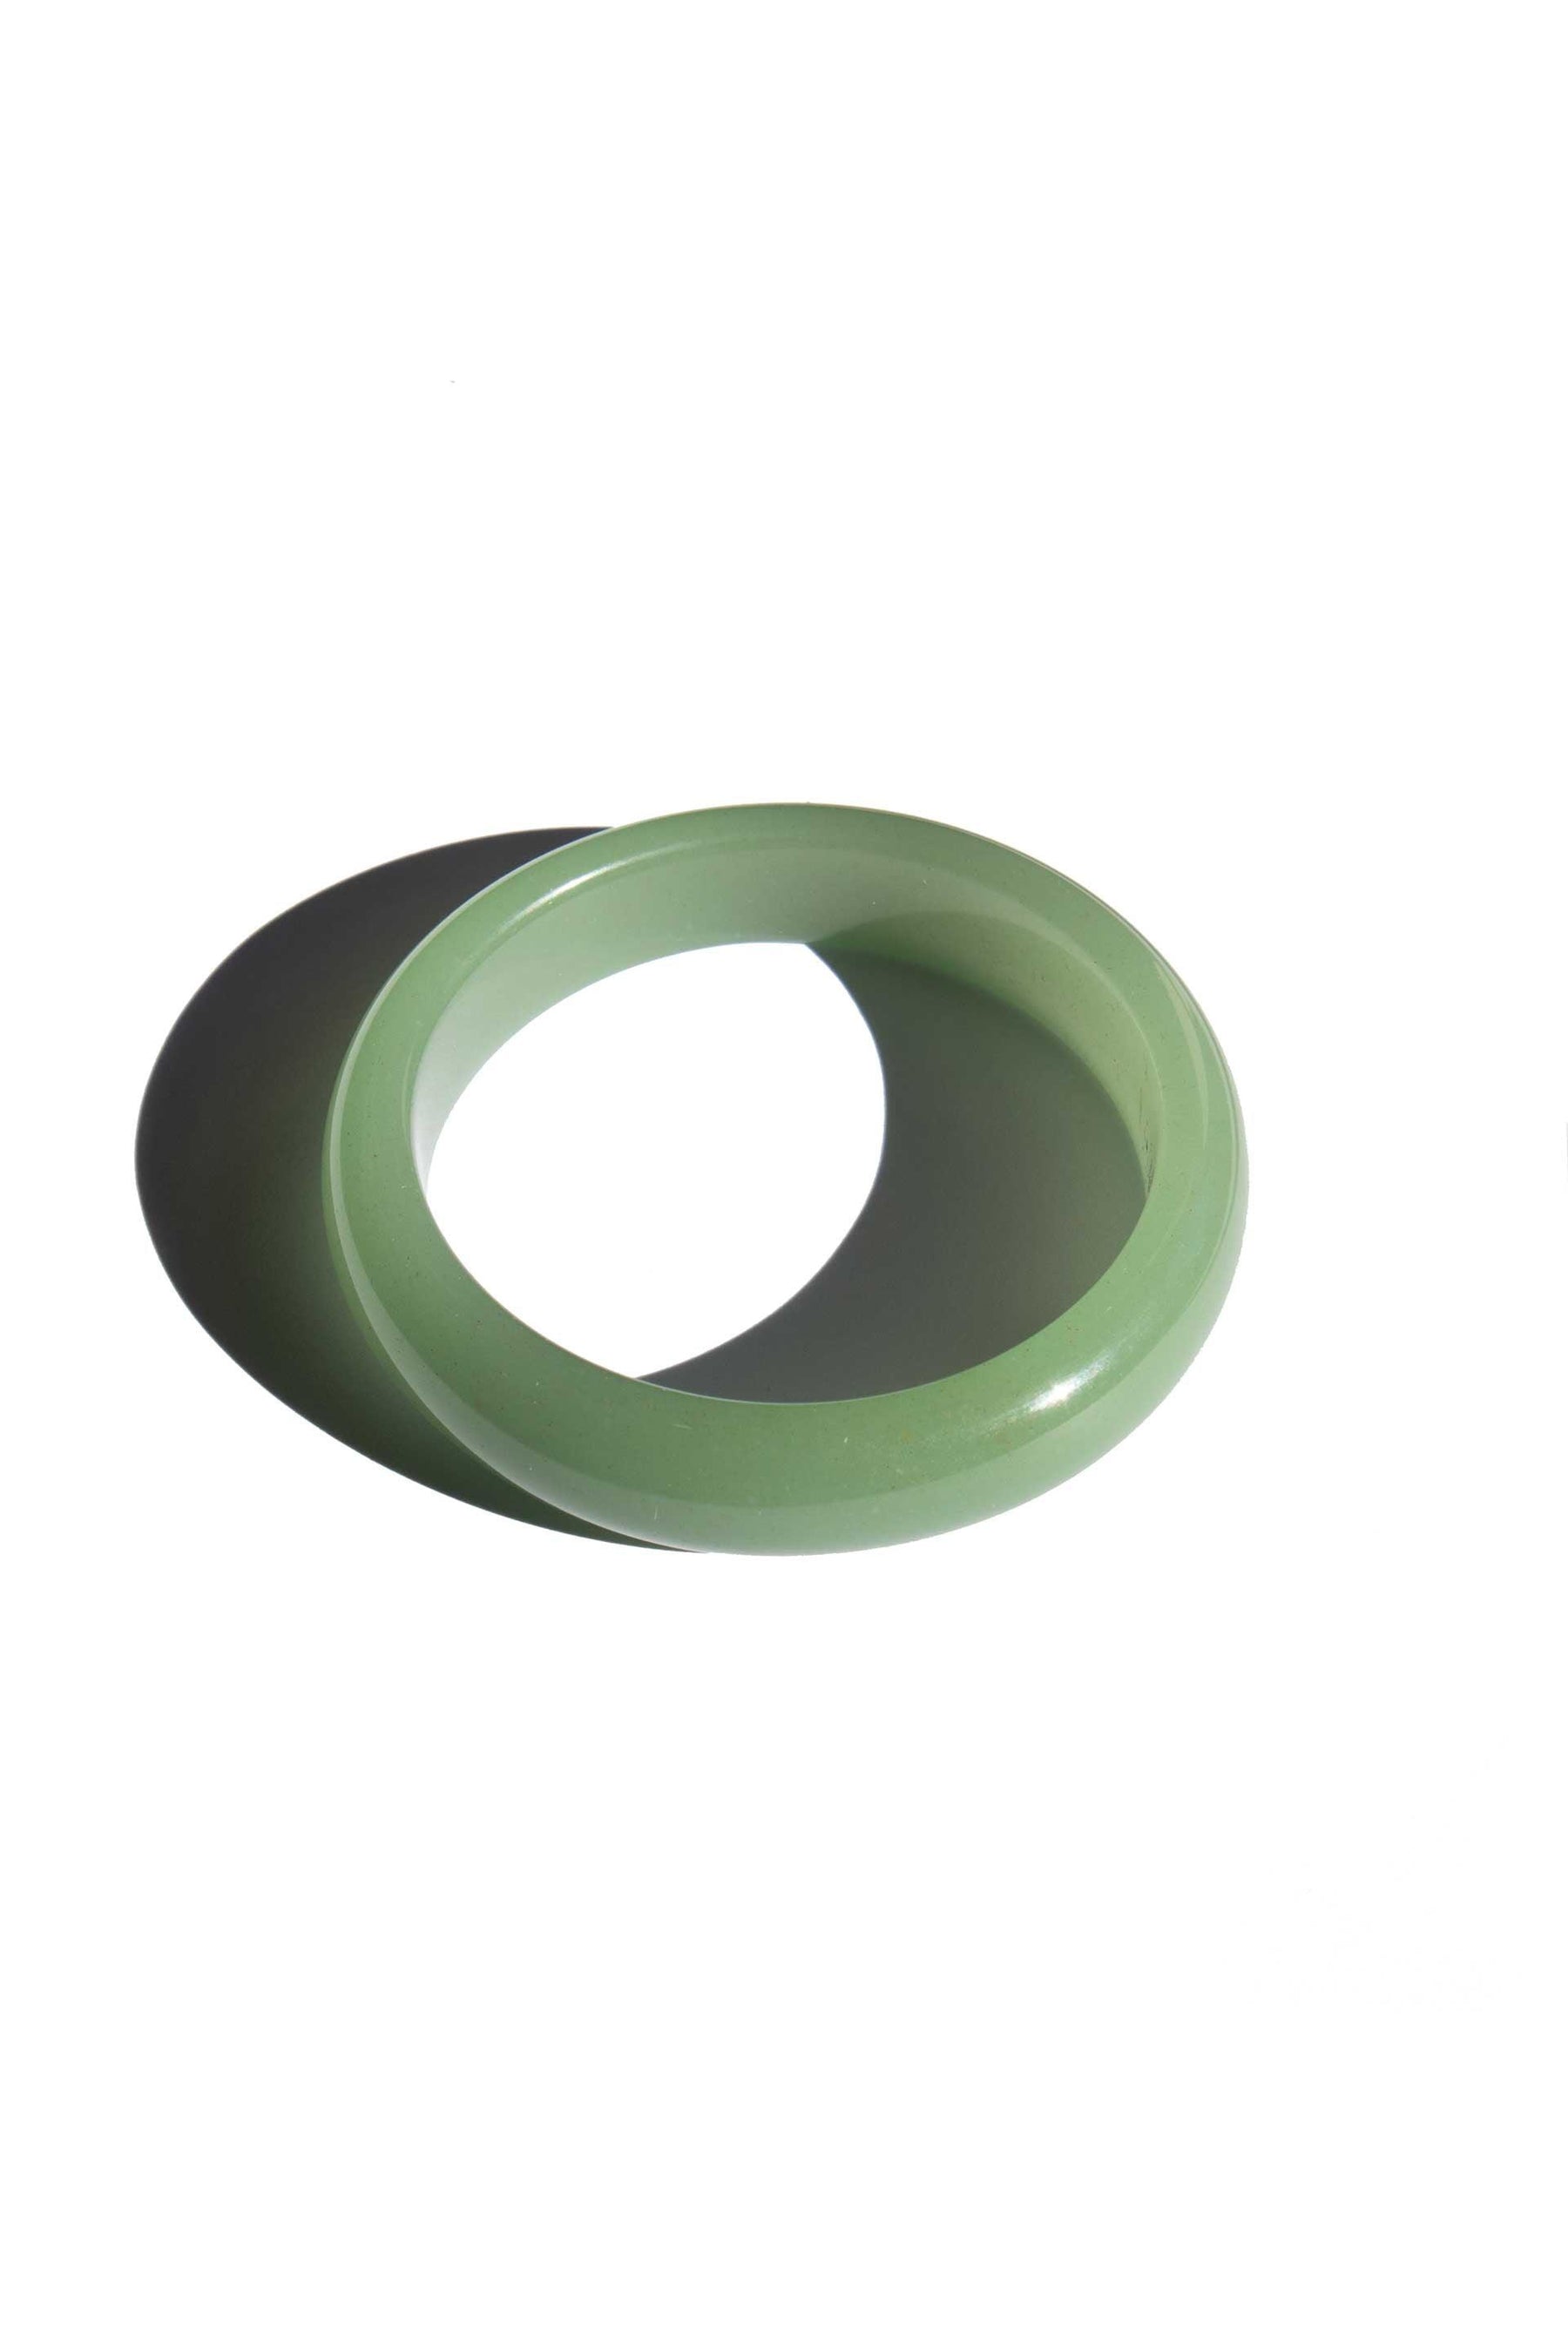 Smoke — Opaque light green jade stone bangle - seree - At Present